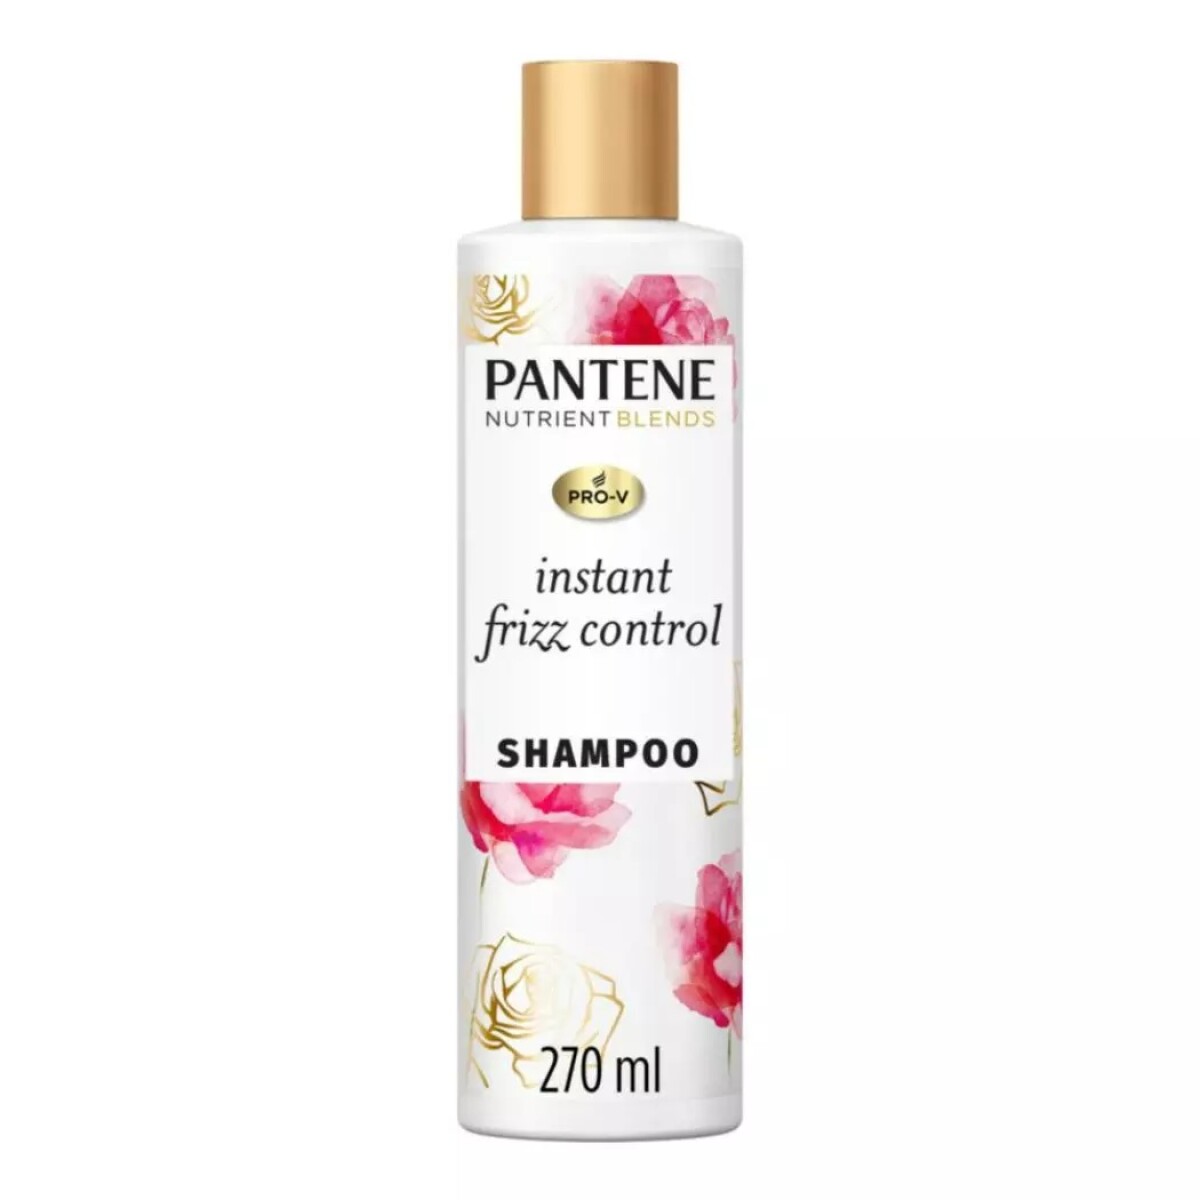 Shampoo Pantene Nutrients Blends Frizz Control 270 Ml. 